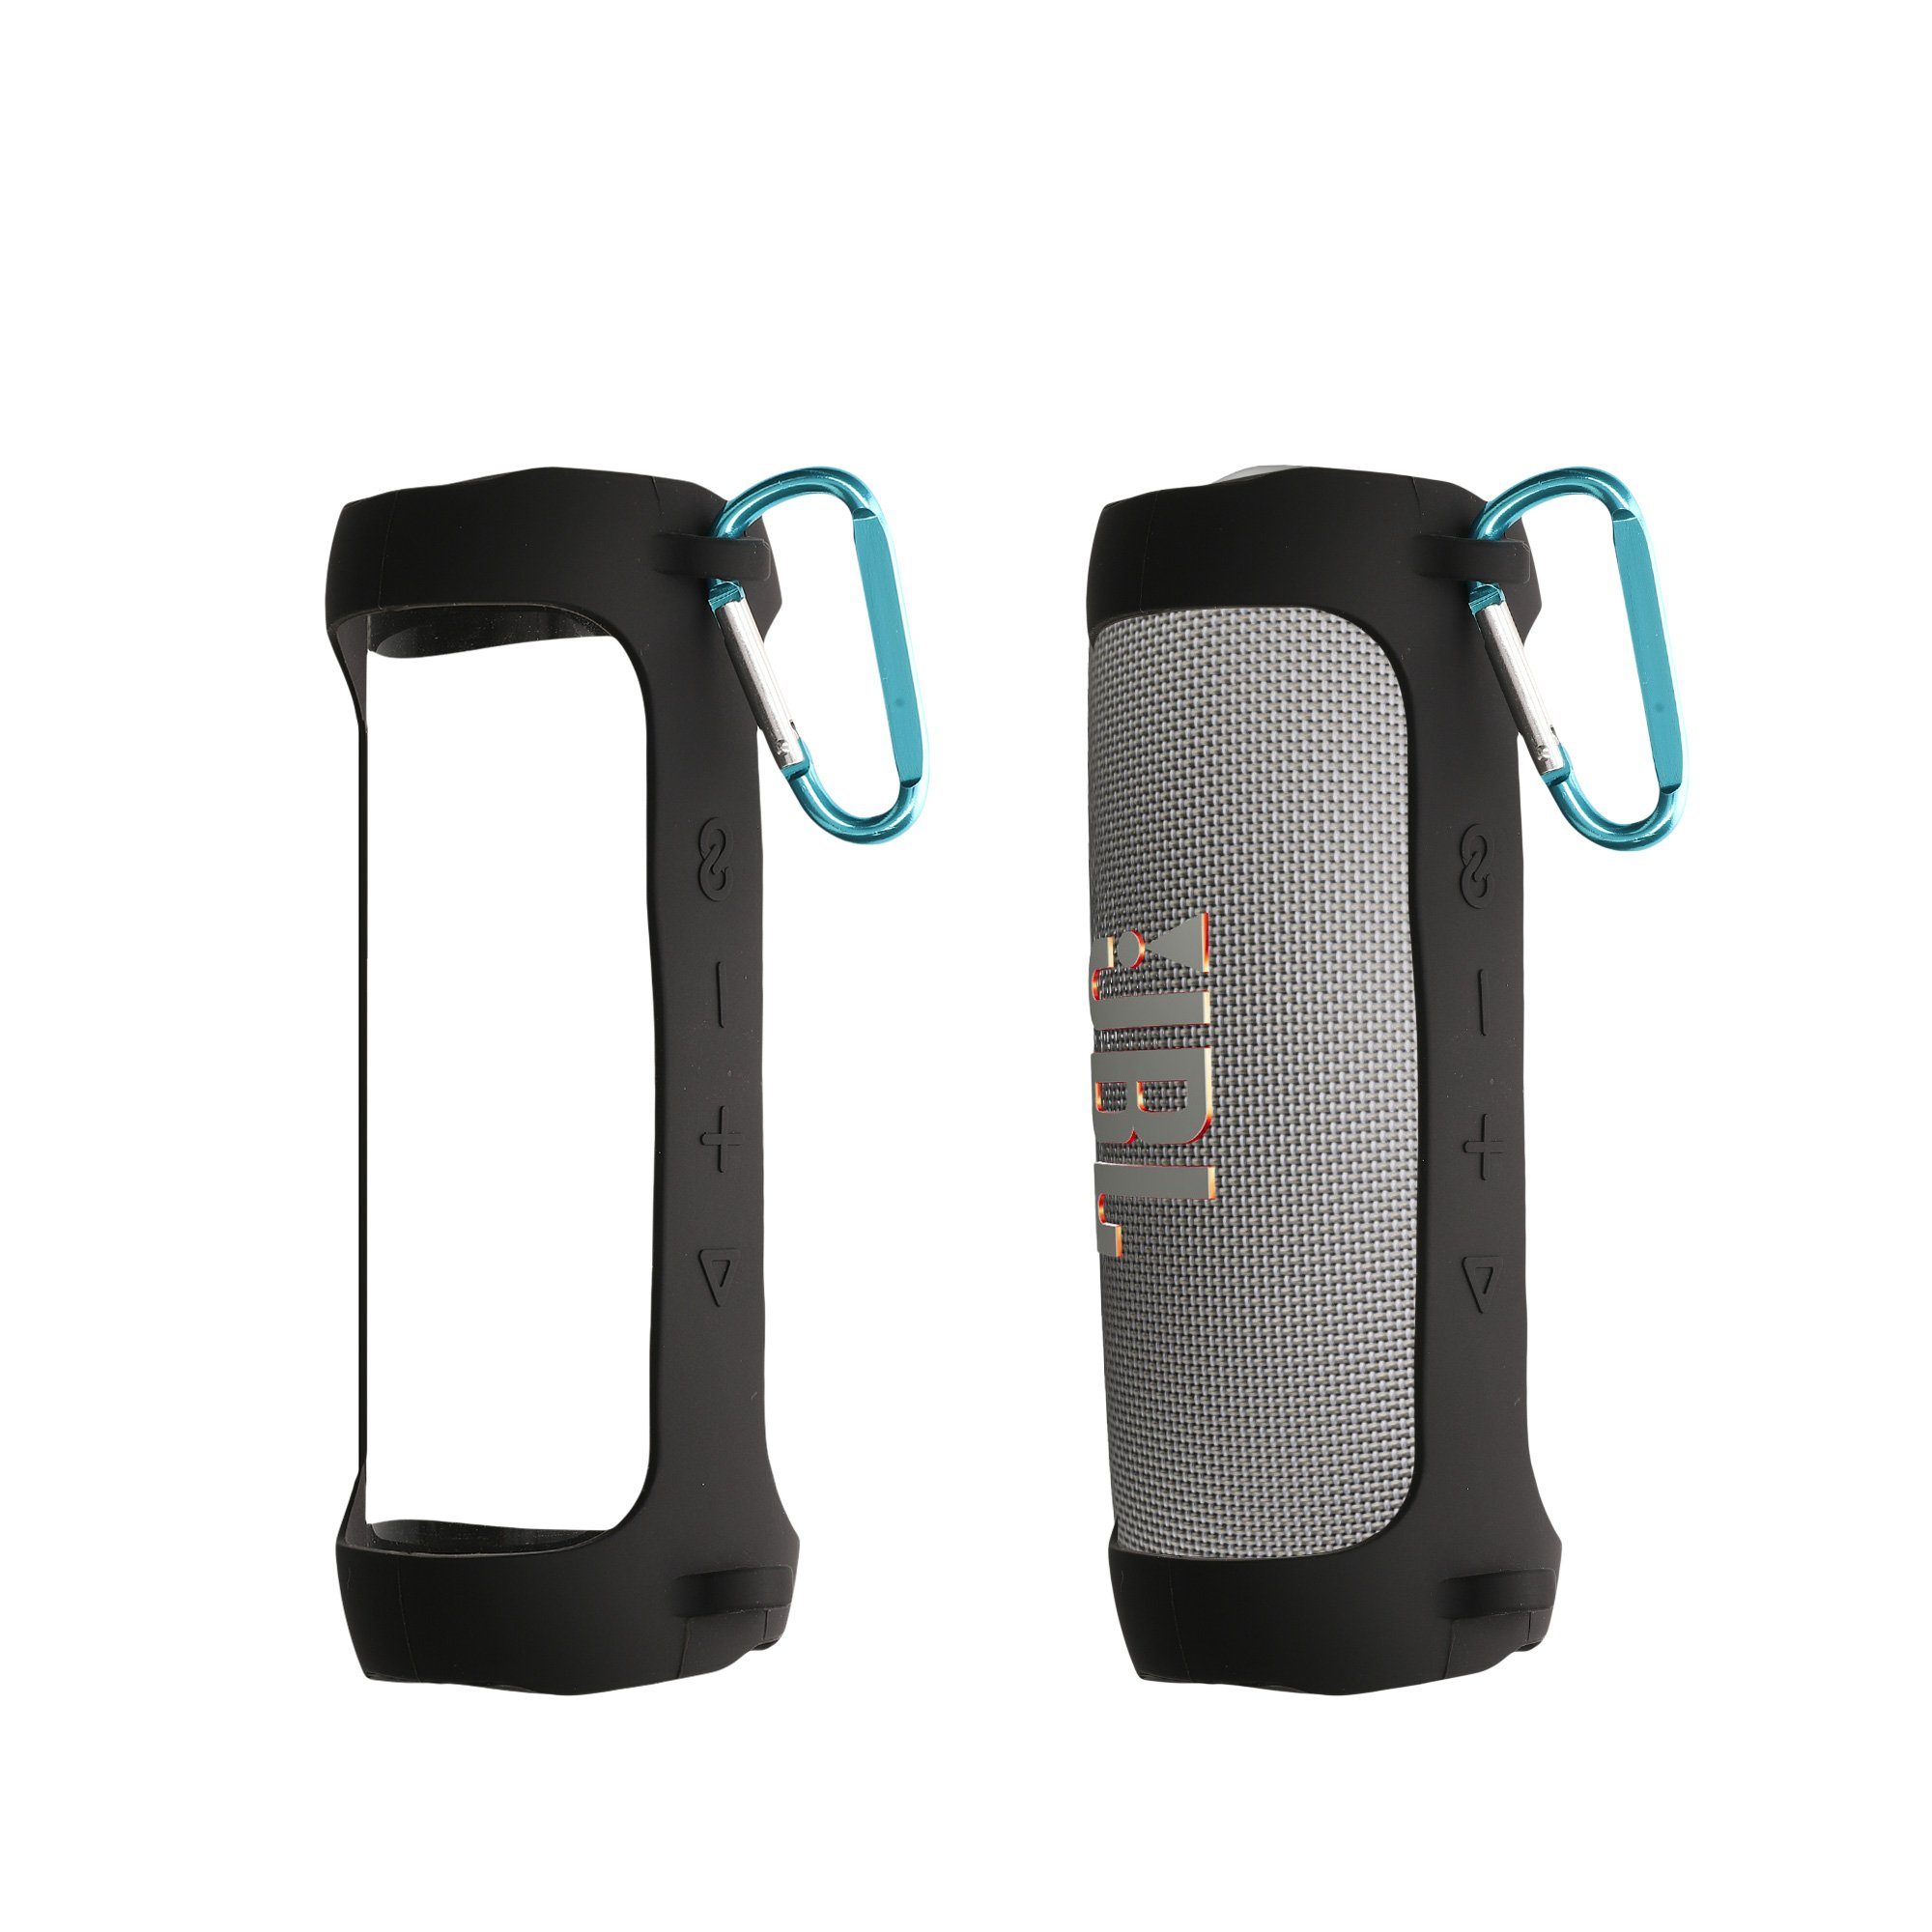 kwmobile Lautsprecher-Hülle Silikon Hülle für JBL Flip 6 / Flip 5, Schutzhülle für Mini Speaker